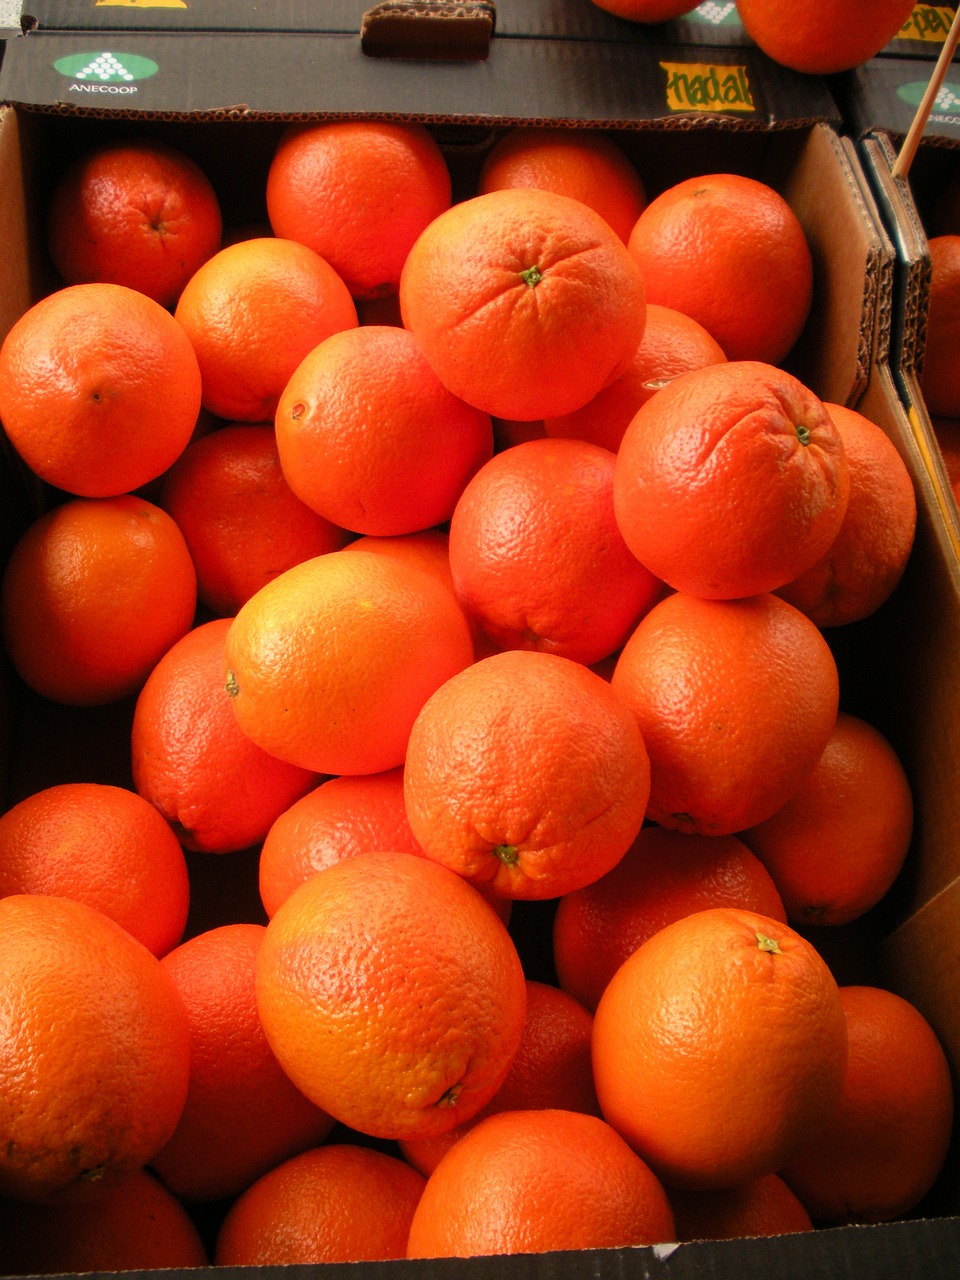 greengrocer fruit crate oranges free photo